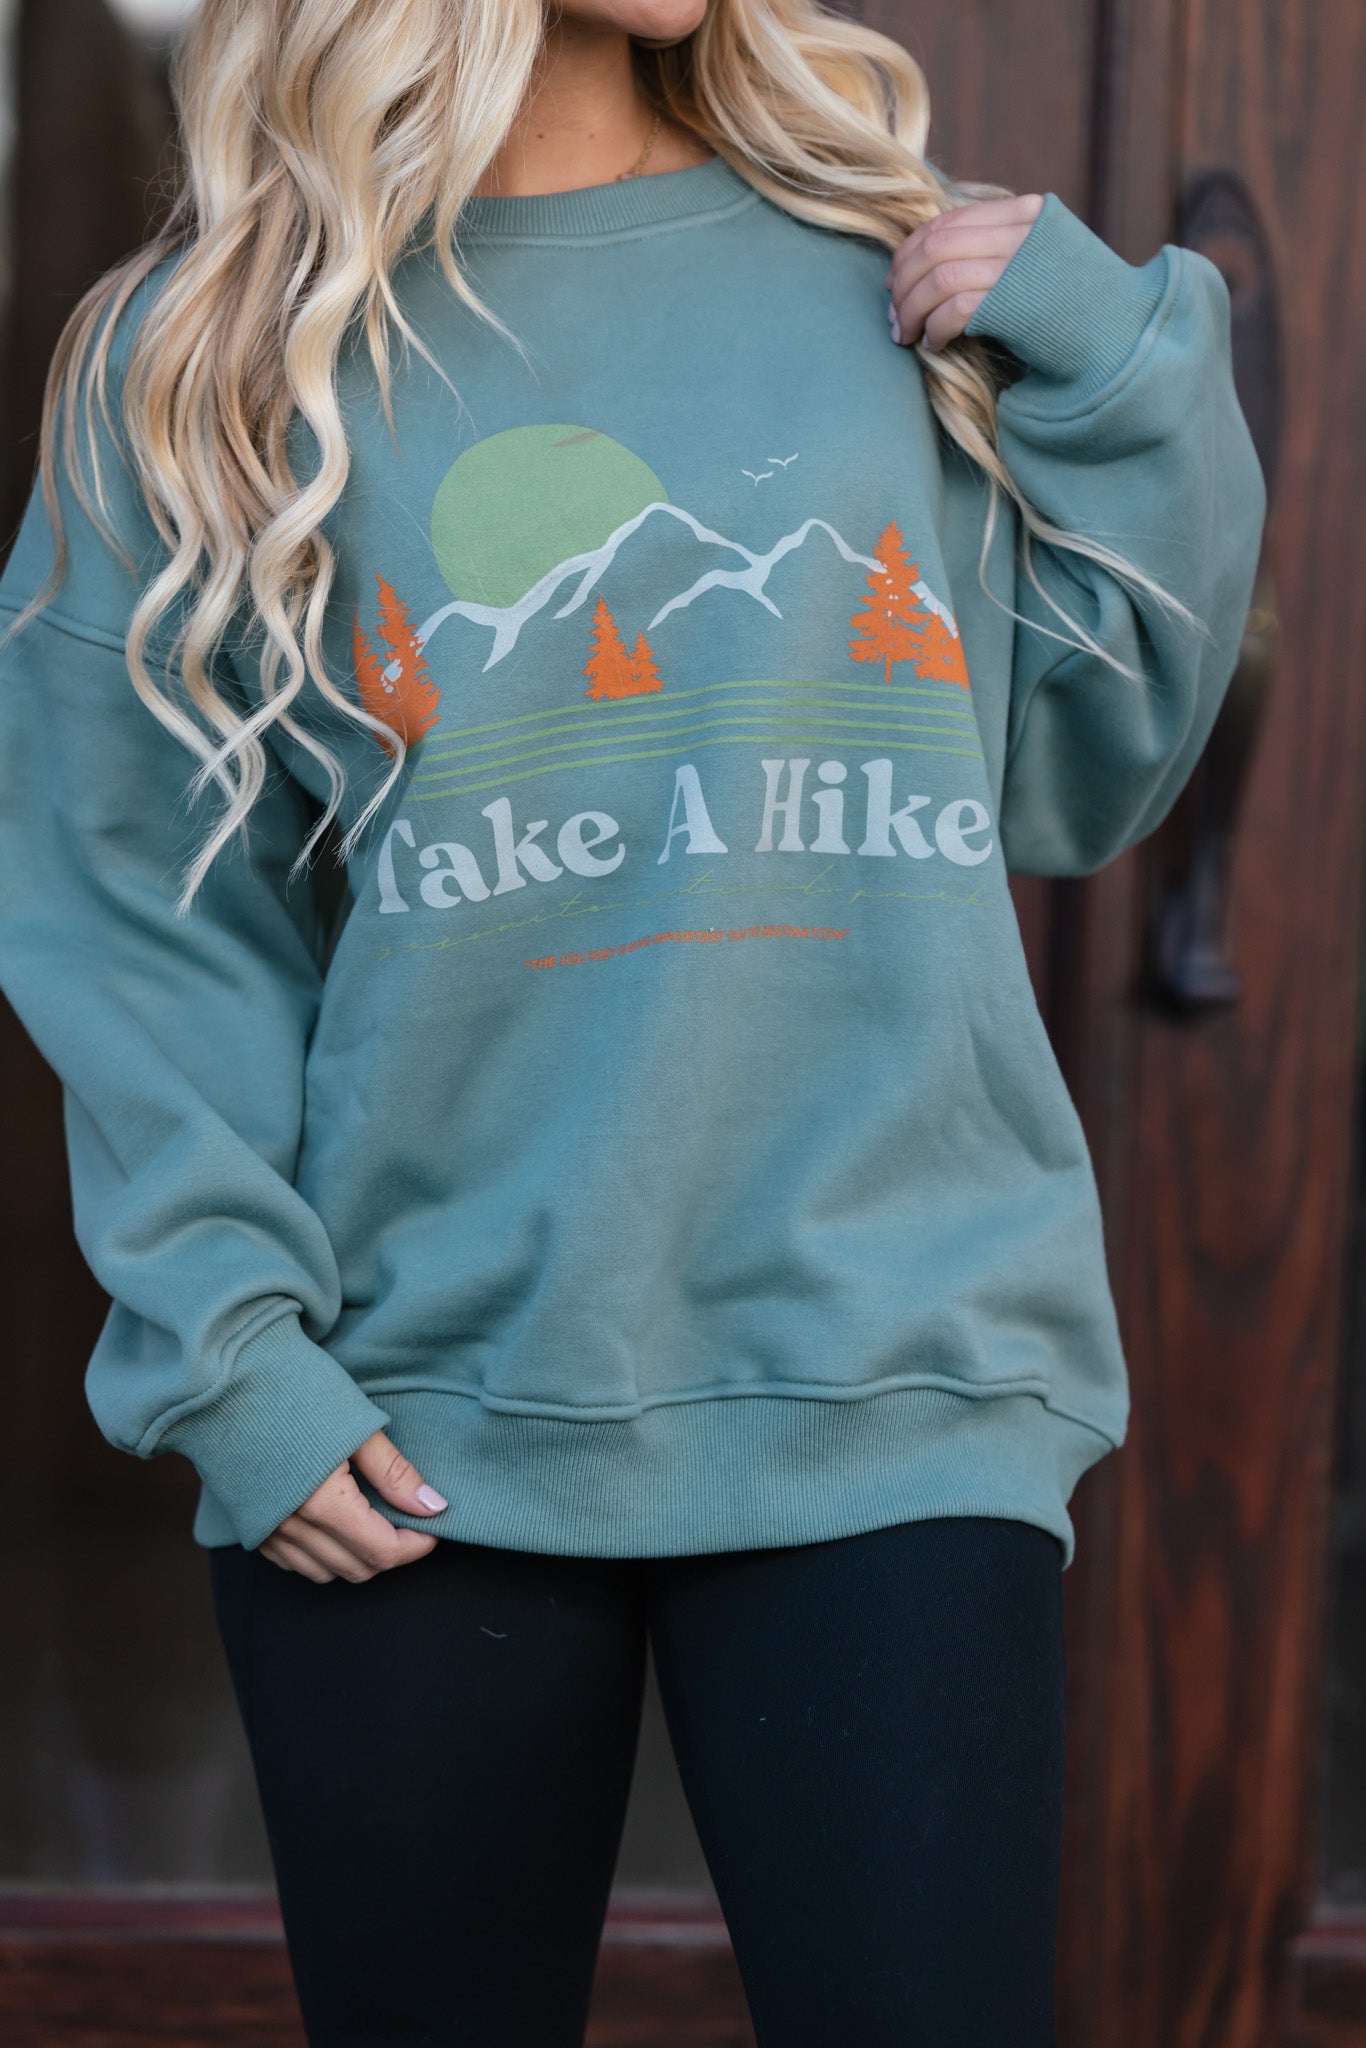 Take A Hike Oversized Sweater FINAL SALE